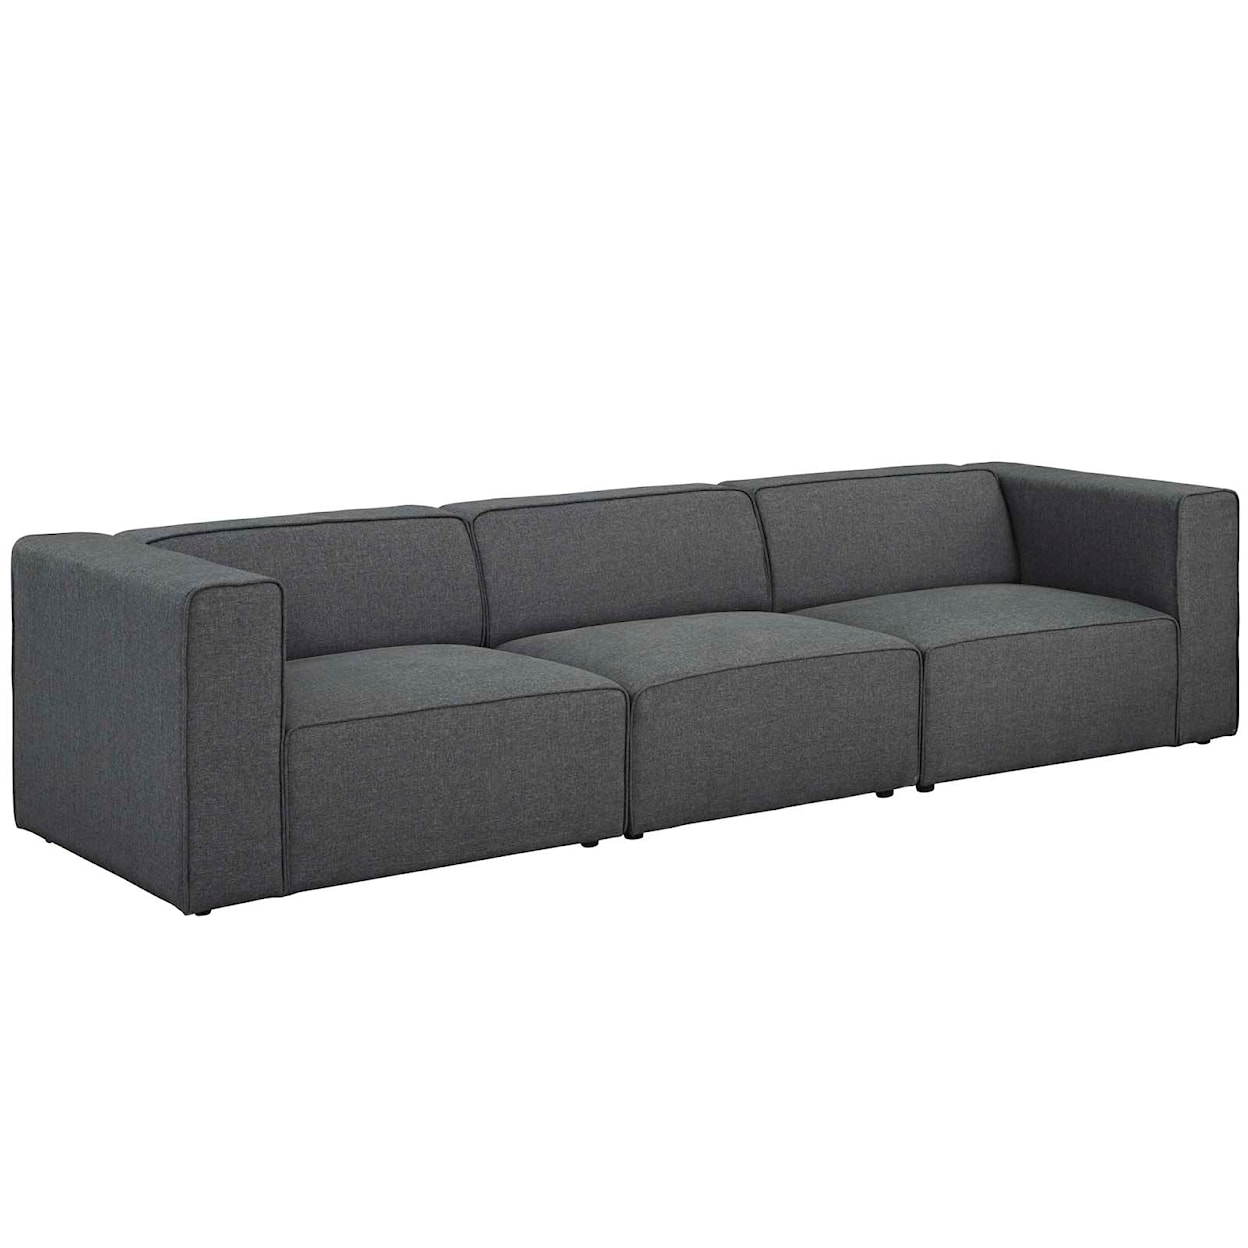 Modway Mingle 3 Piece Sectional Sofa Set